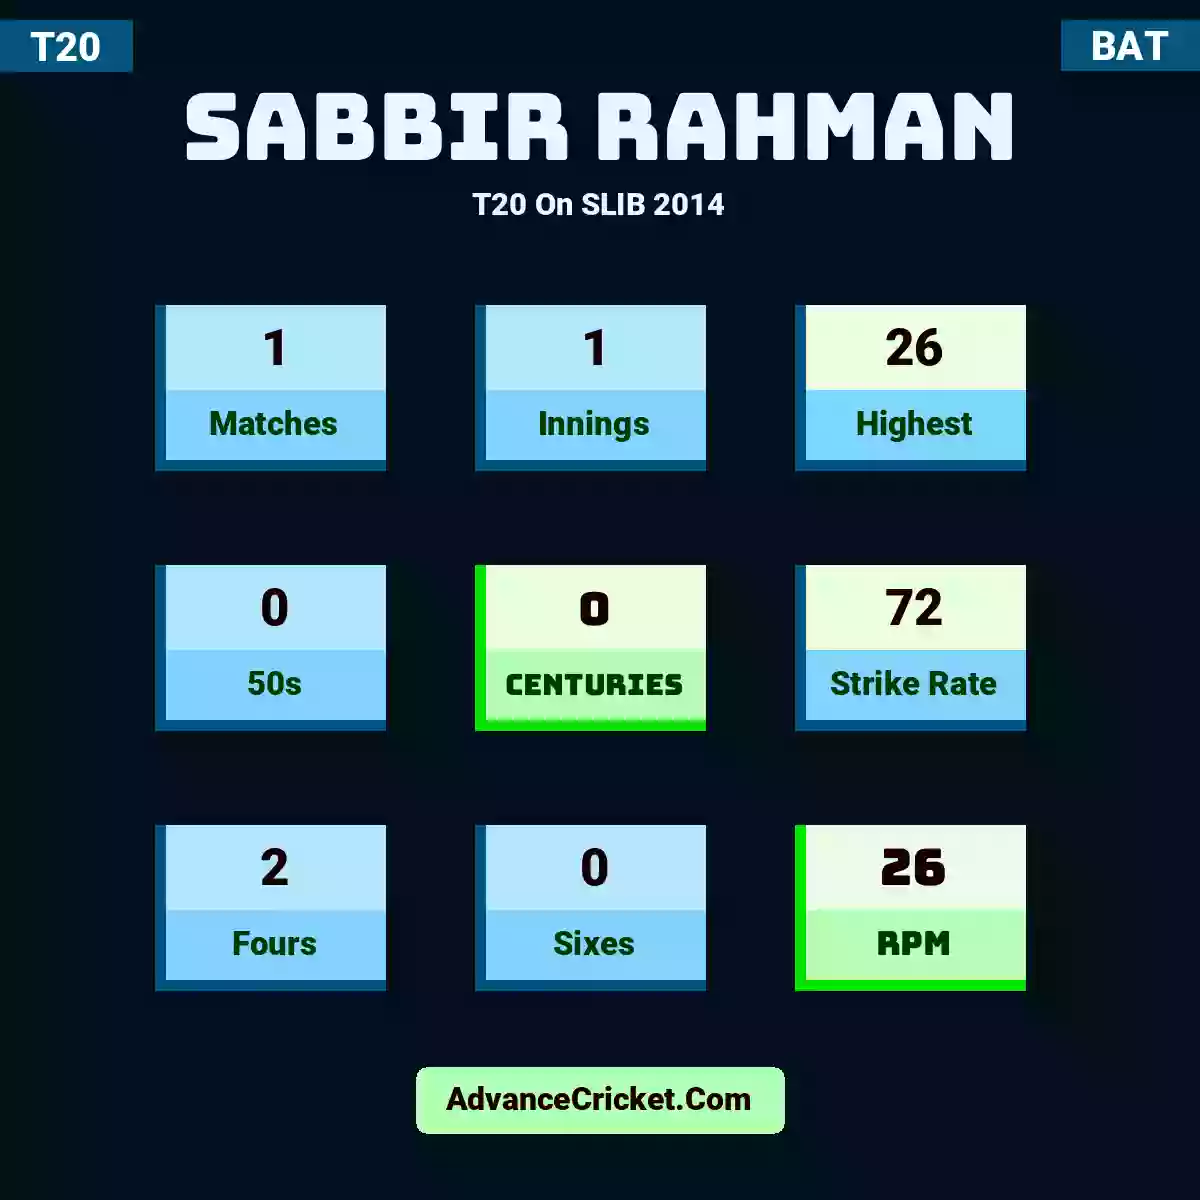 Sabbir Rahman T20  On SLIB 2014, Sabbir Rahman played 1 matches, scored 26 runs as highest, 0 half-centuries, and 0 centuries, with a strike rate of 72. S.Rahman hit 2 fours and 0 sixes, with an RPM of 26.